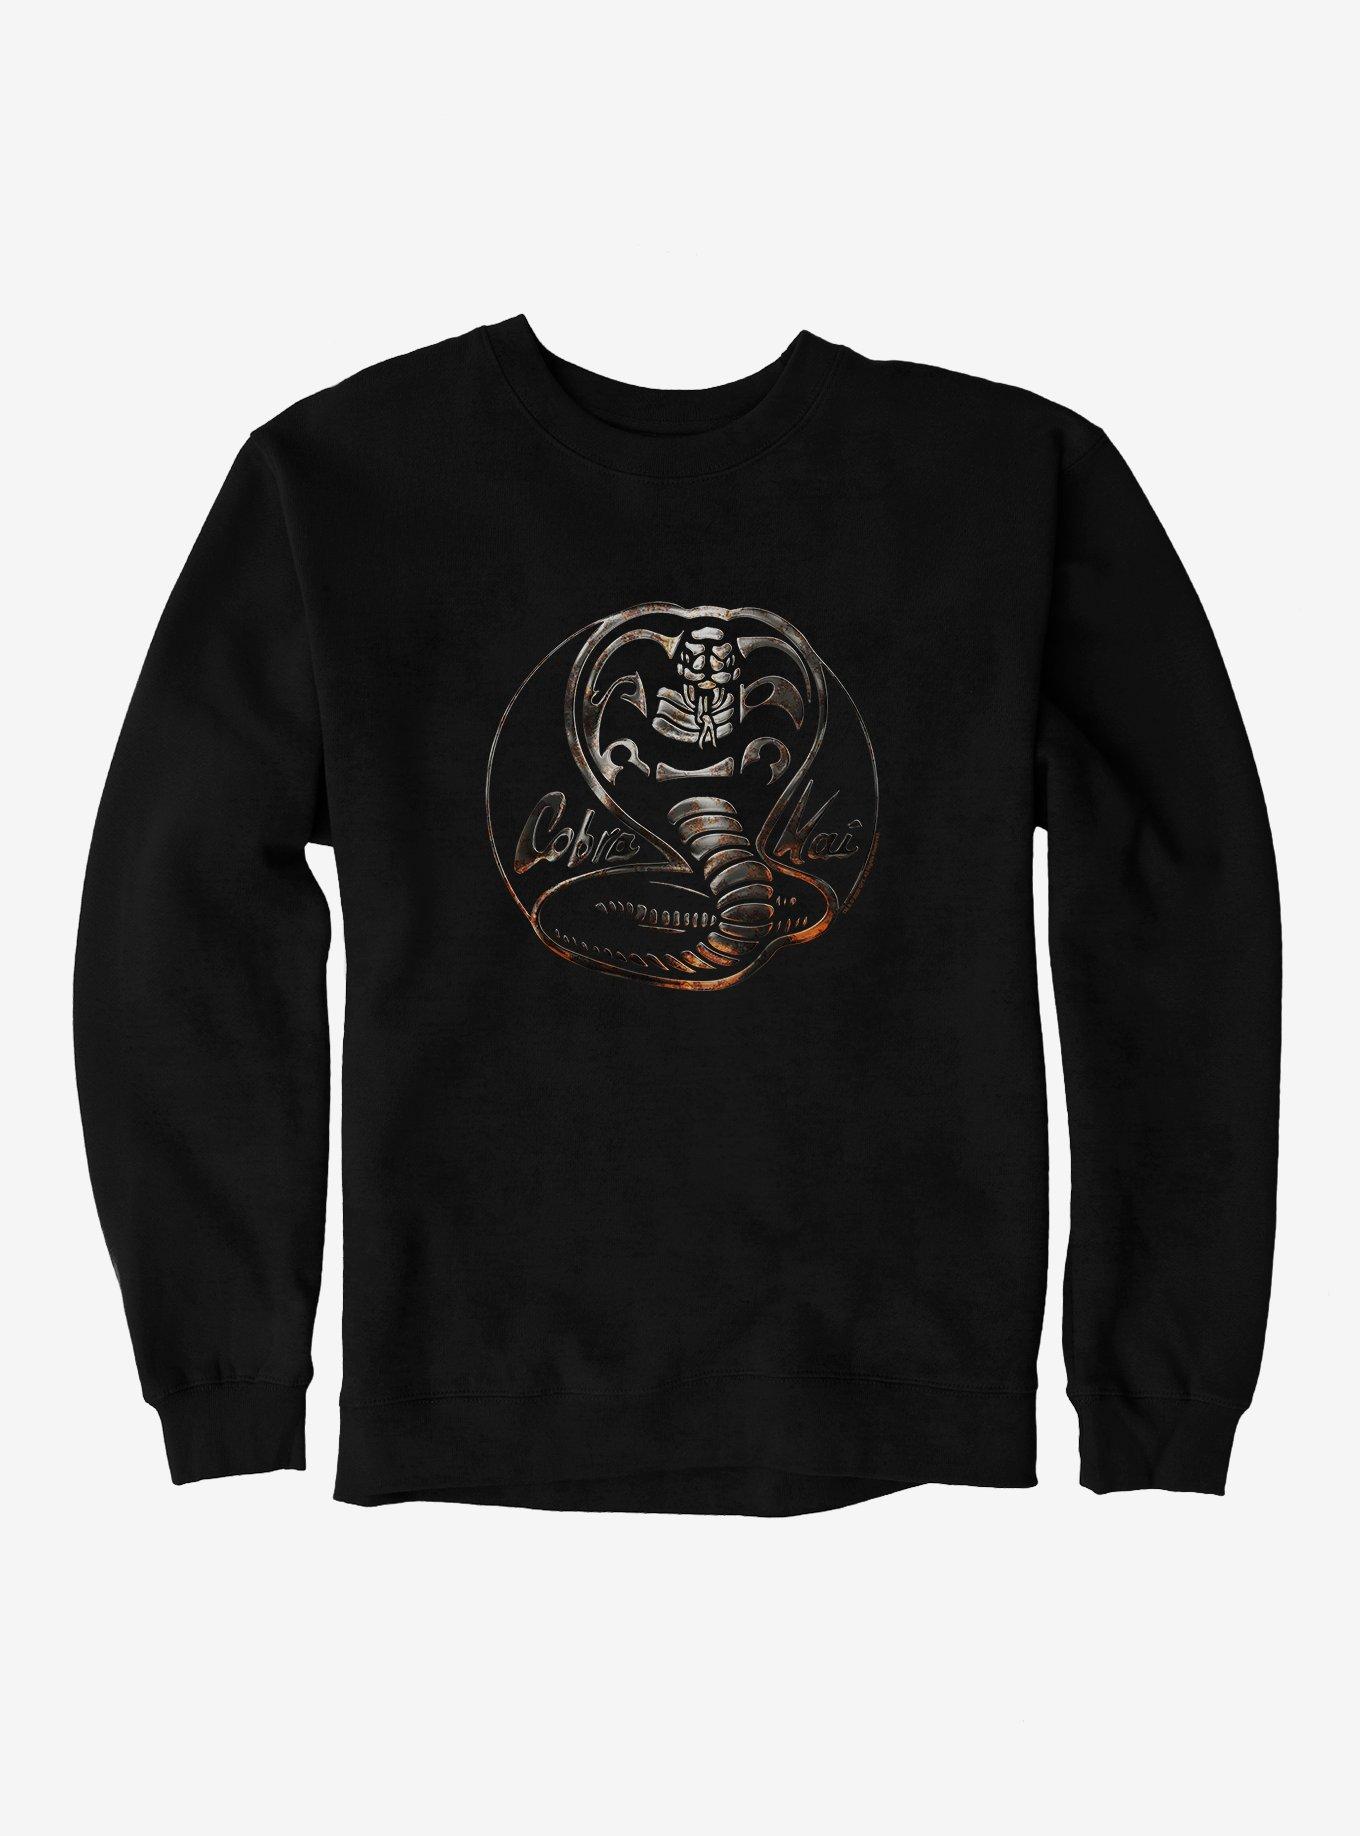 Cobra Kai Snake Sweatshirt